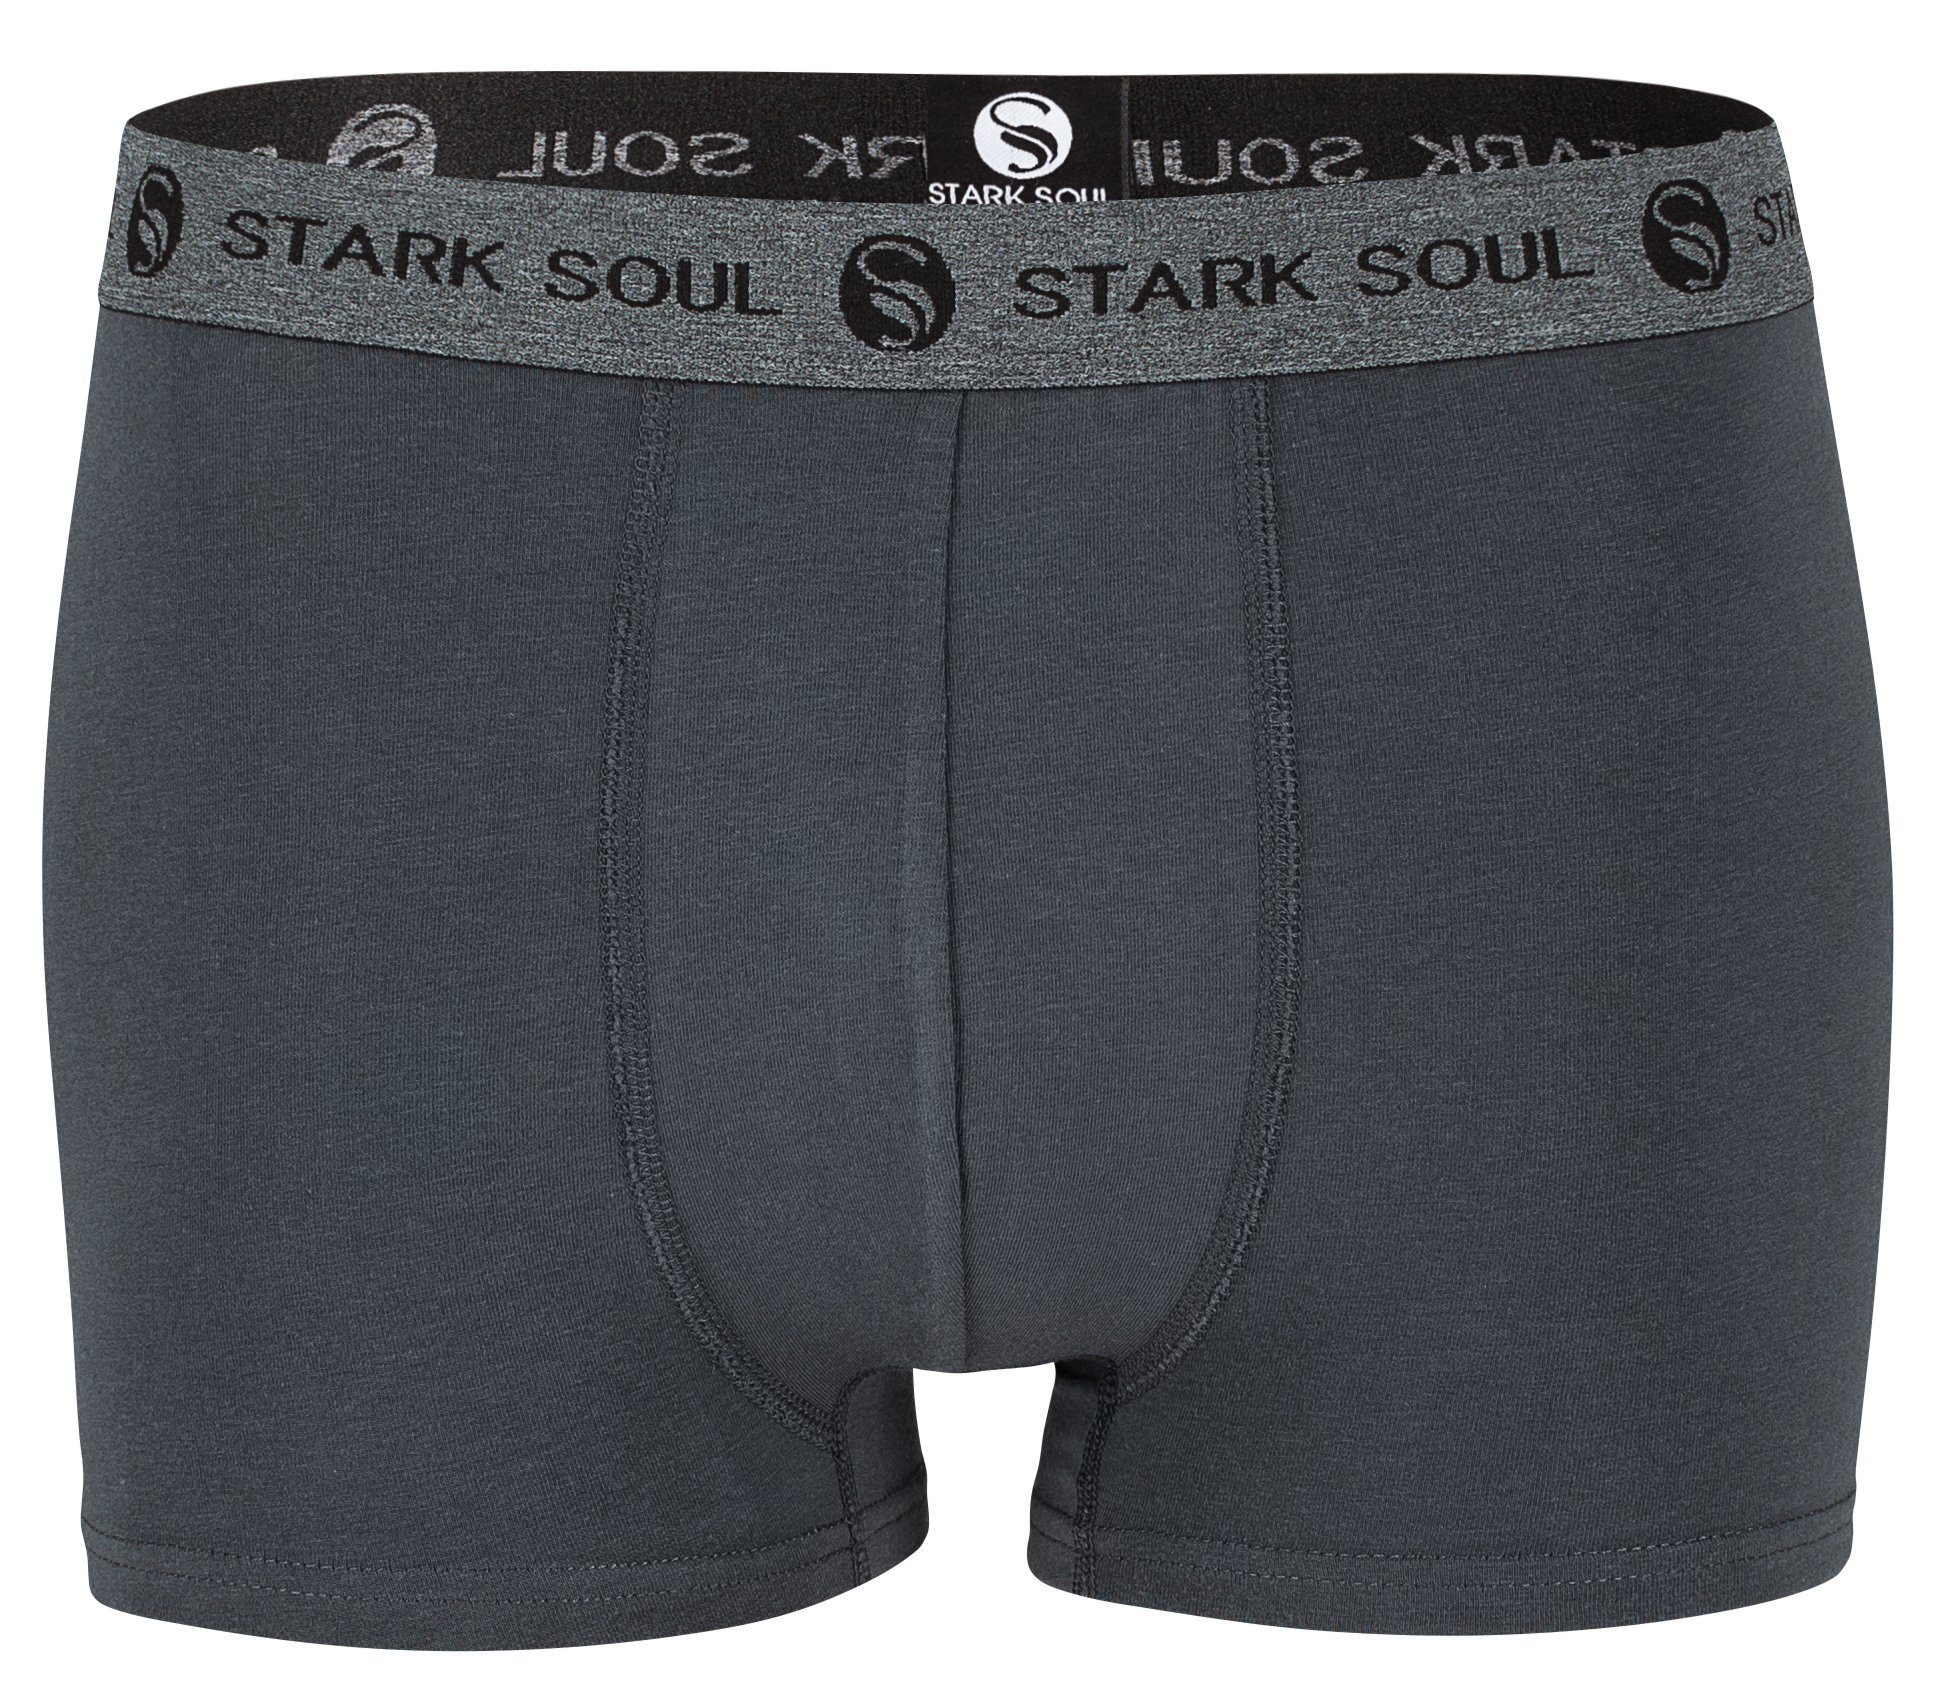 6er Stark Baumwoll-Unterhosen im 6er-Pack Pack, Herren Boxershorts Hipster Dunkelgrau Boxershorts, Soul®